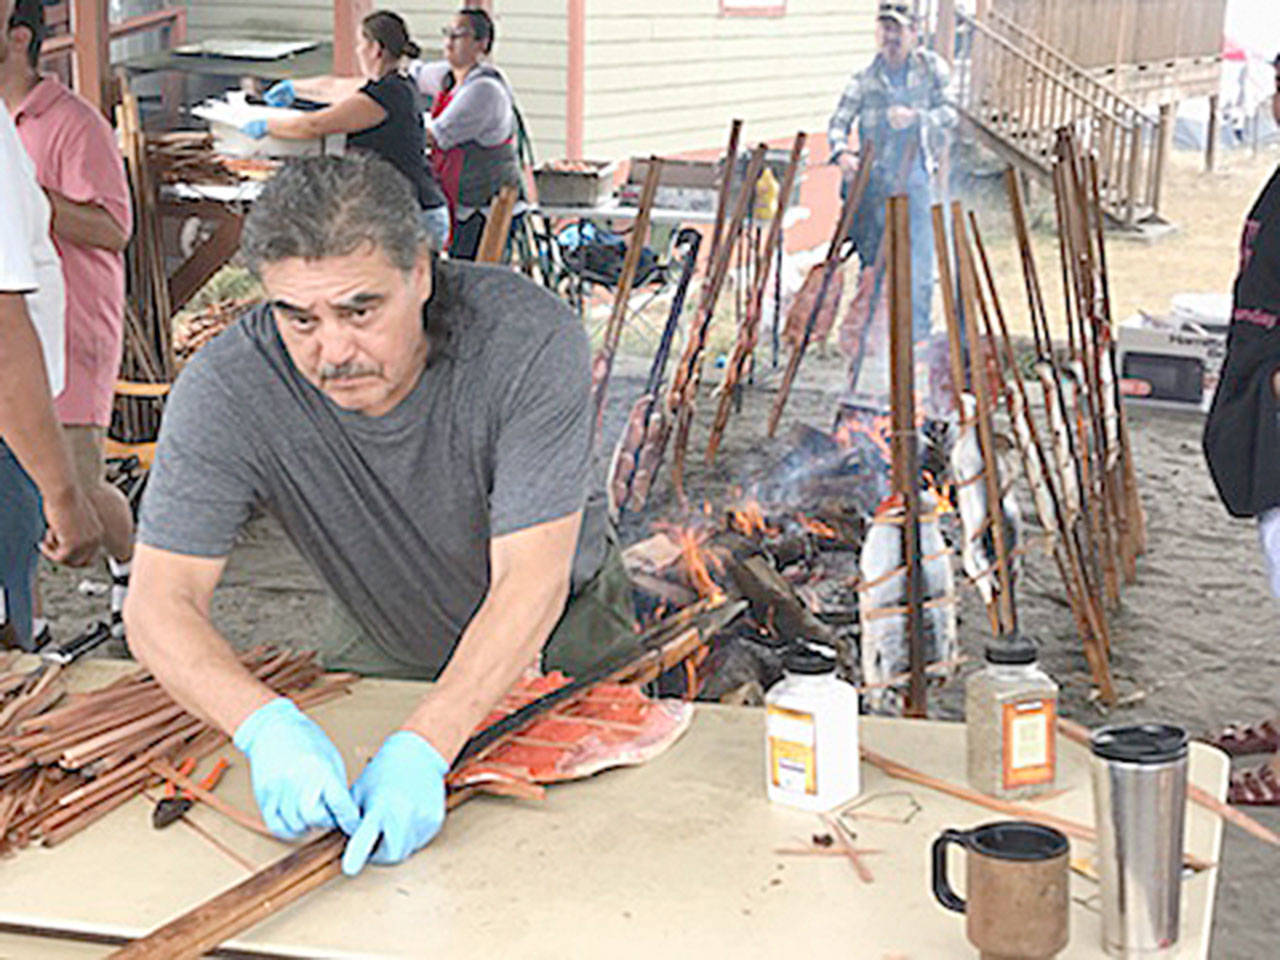 Monty McAlpin prepares sockeye salmon filets that were caught for the 2018 Makah Days salmon bake. (Paul Gottlieb/Peninsula Daily News)